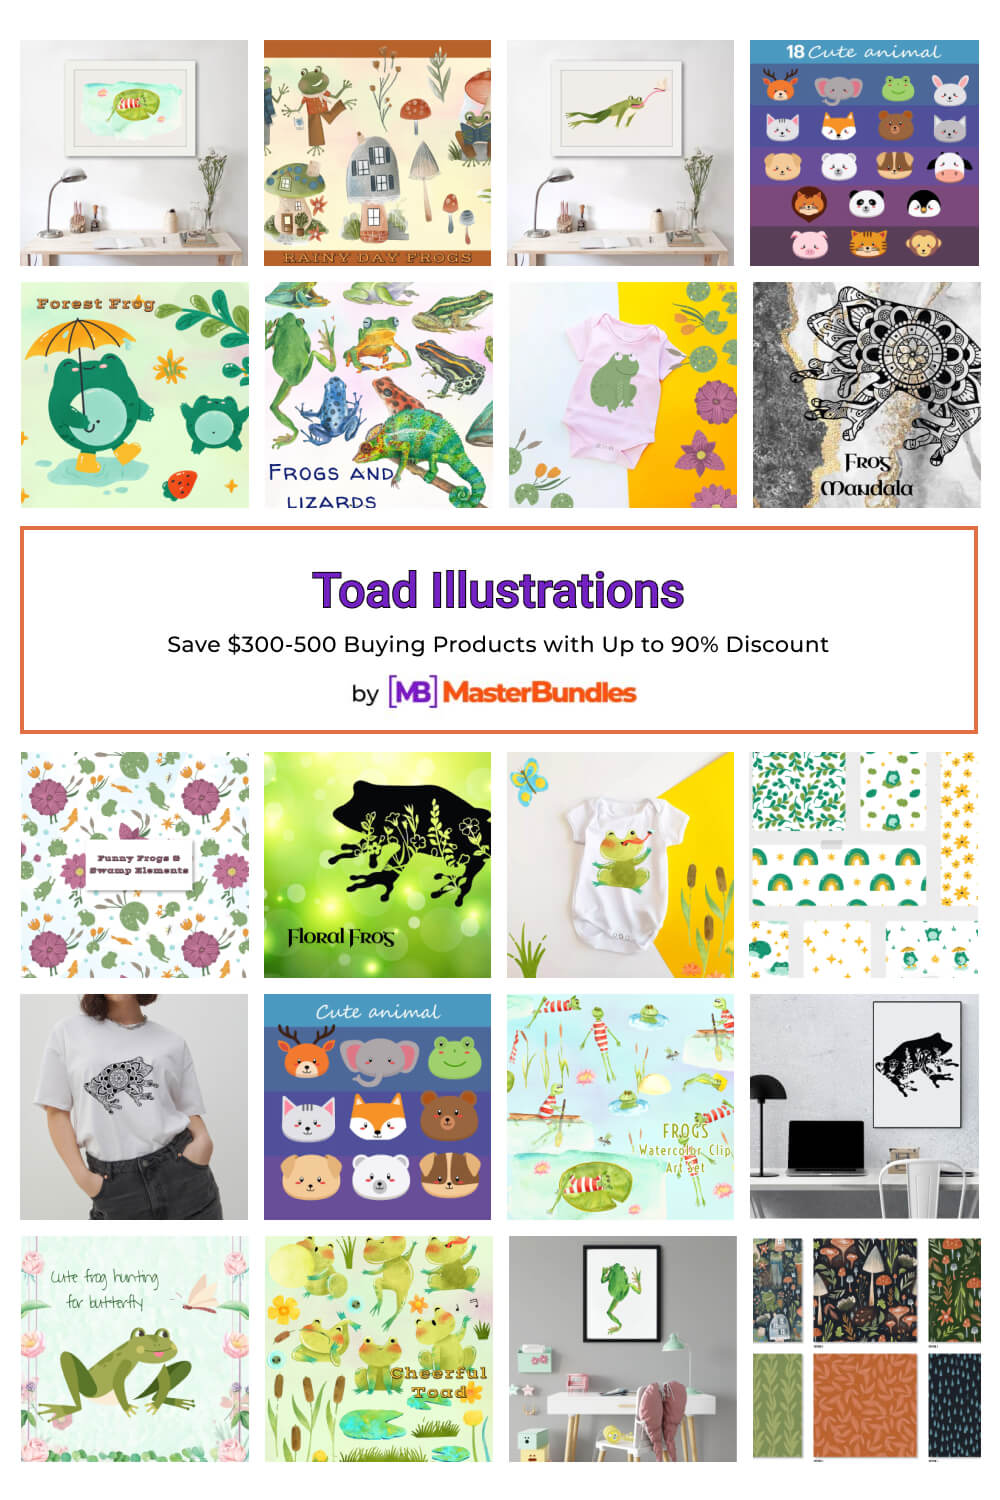 toad illustrations pinterest image.